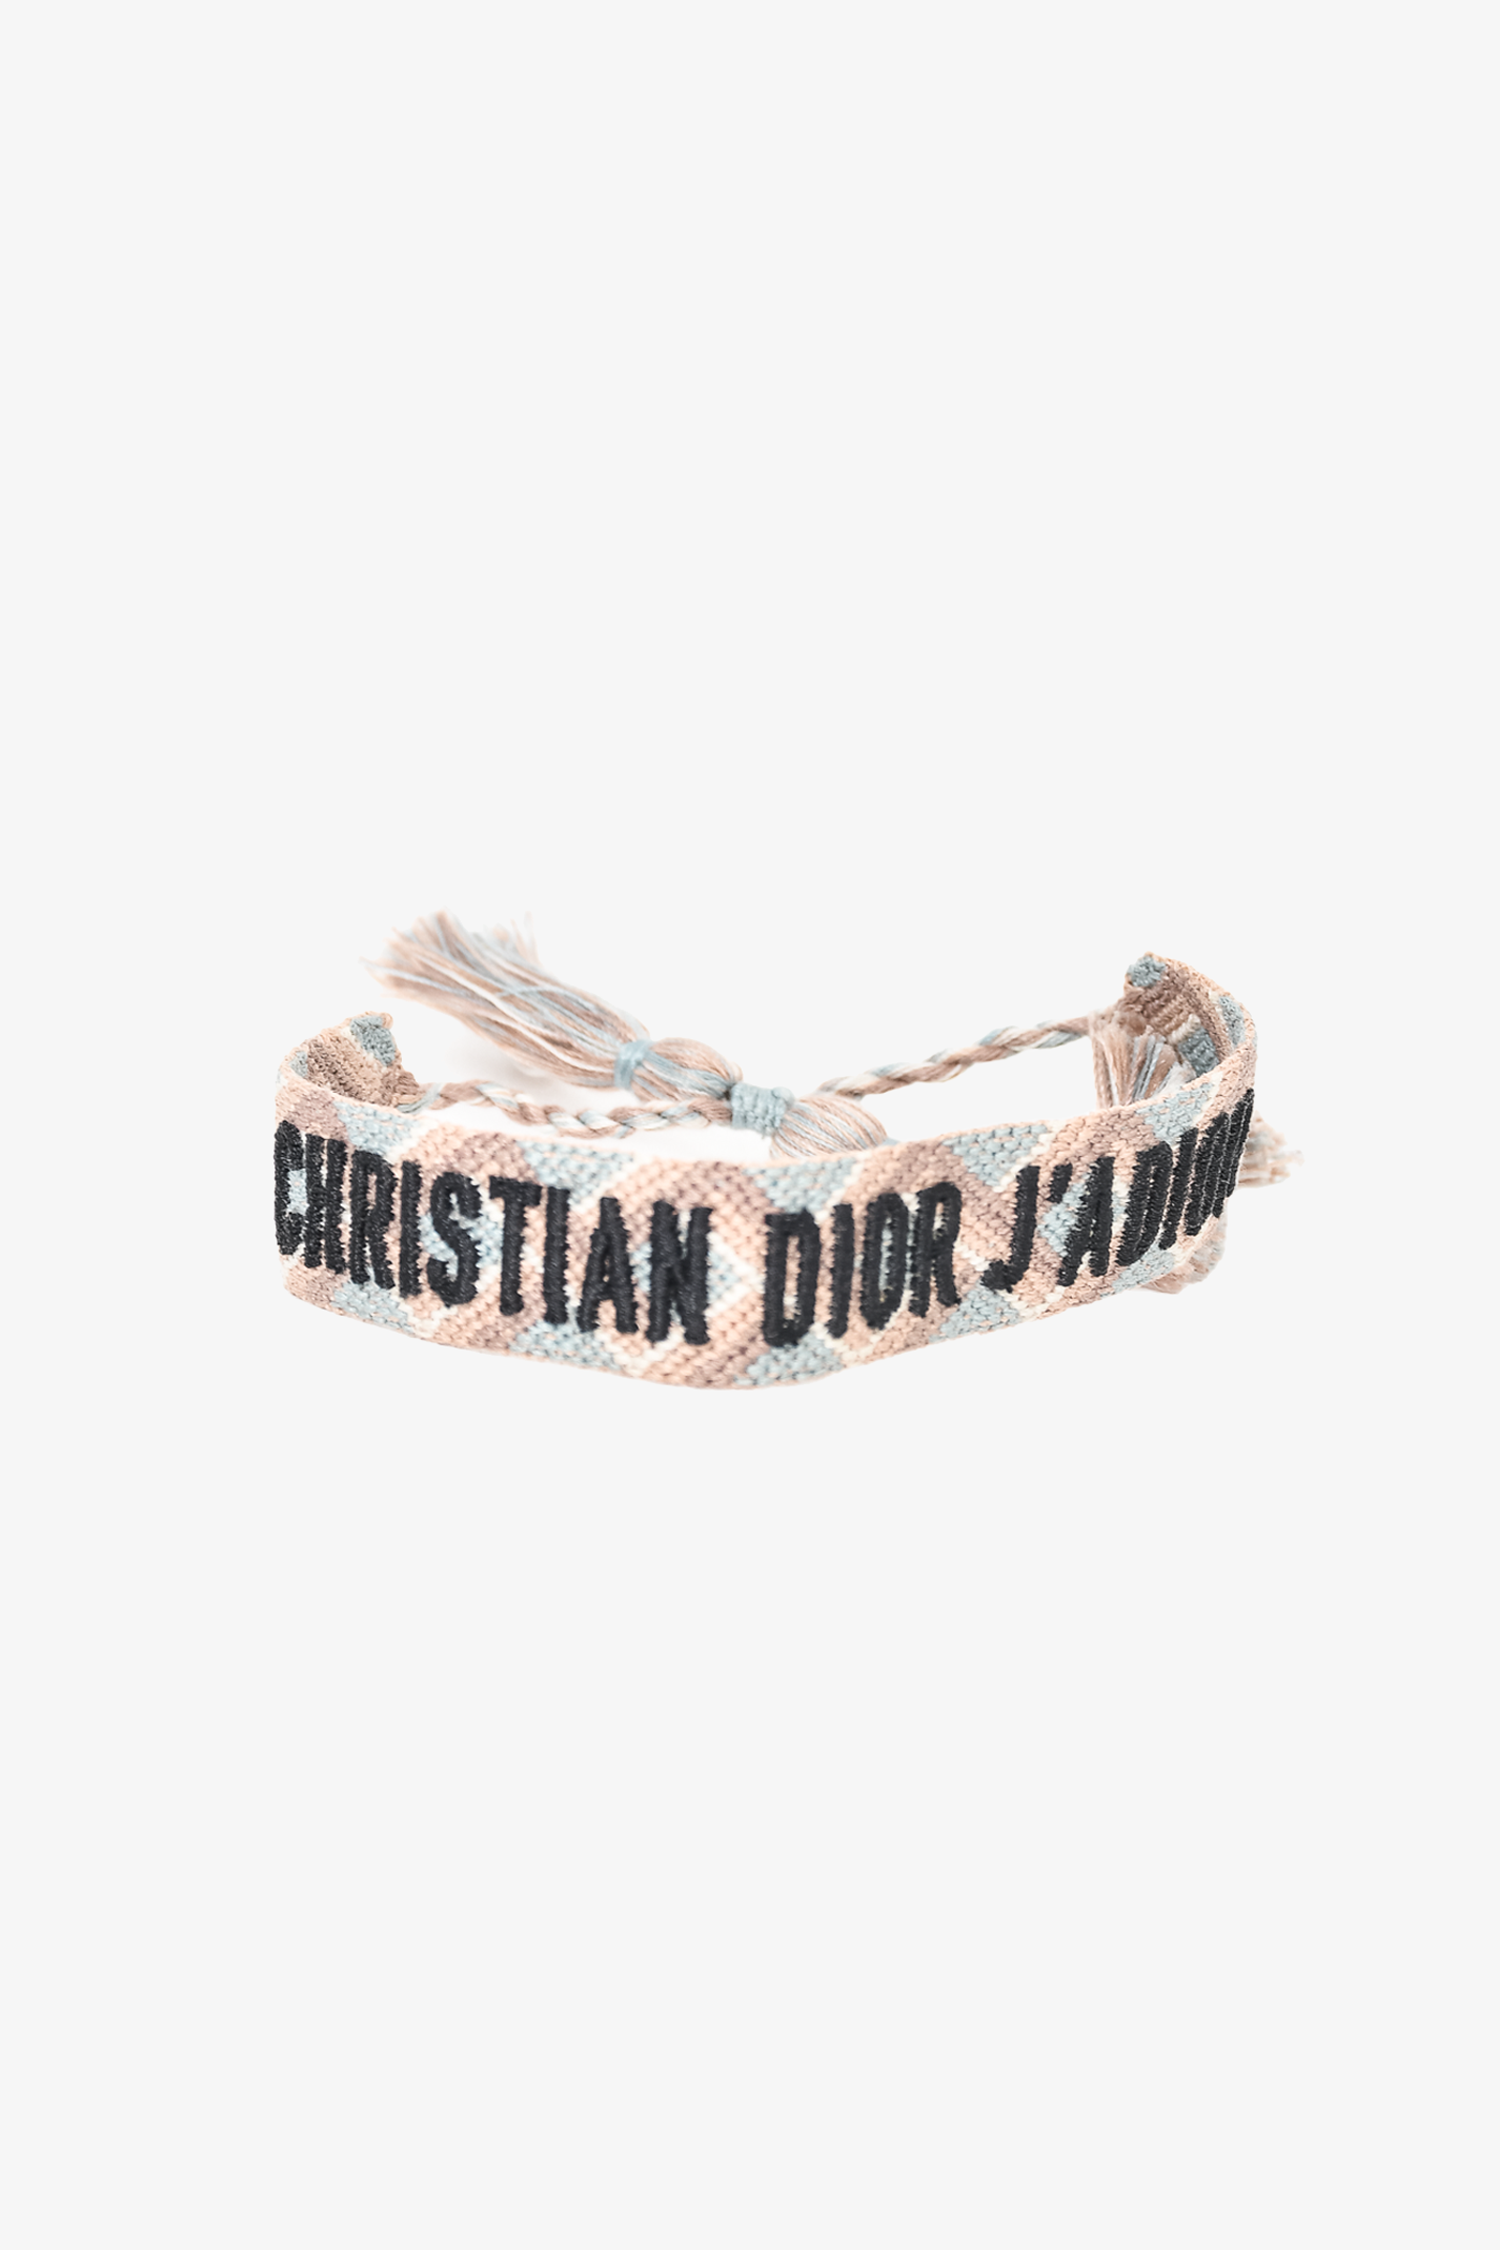 Dior friendship bracelets | Friendship bracelets, Bracelets, Dior